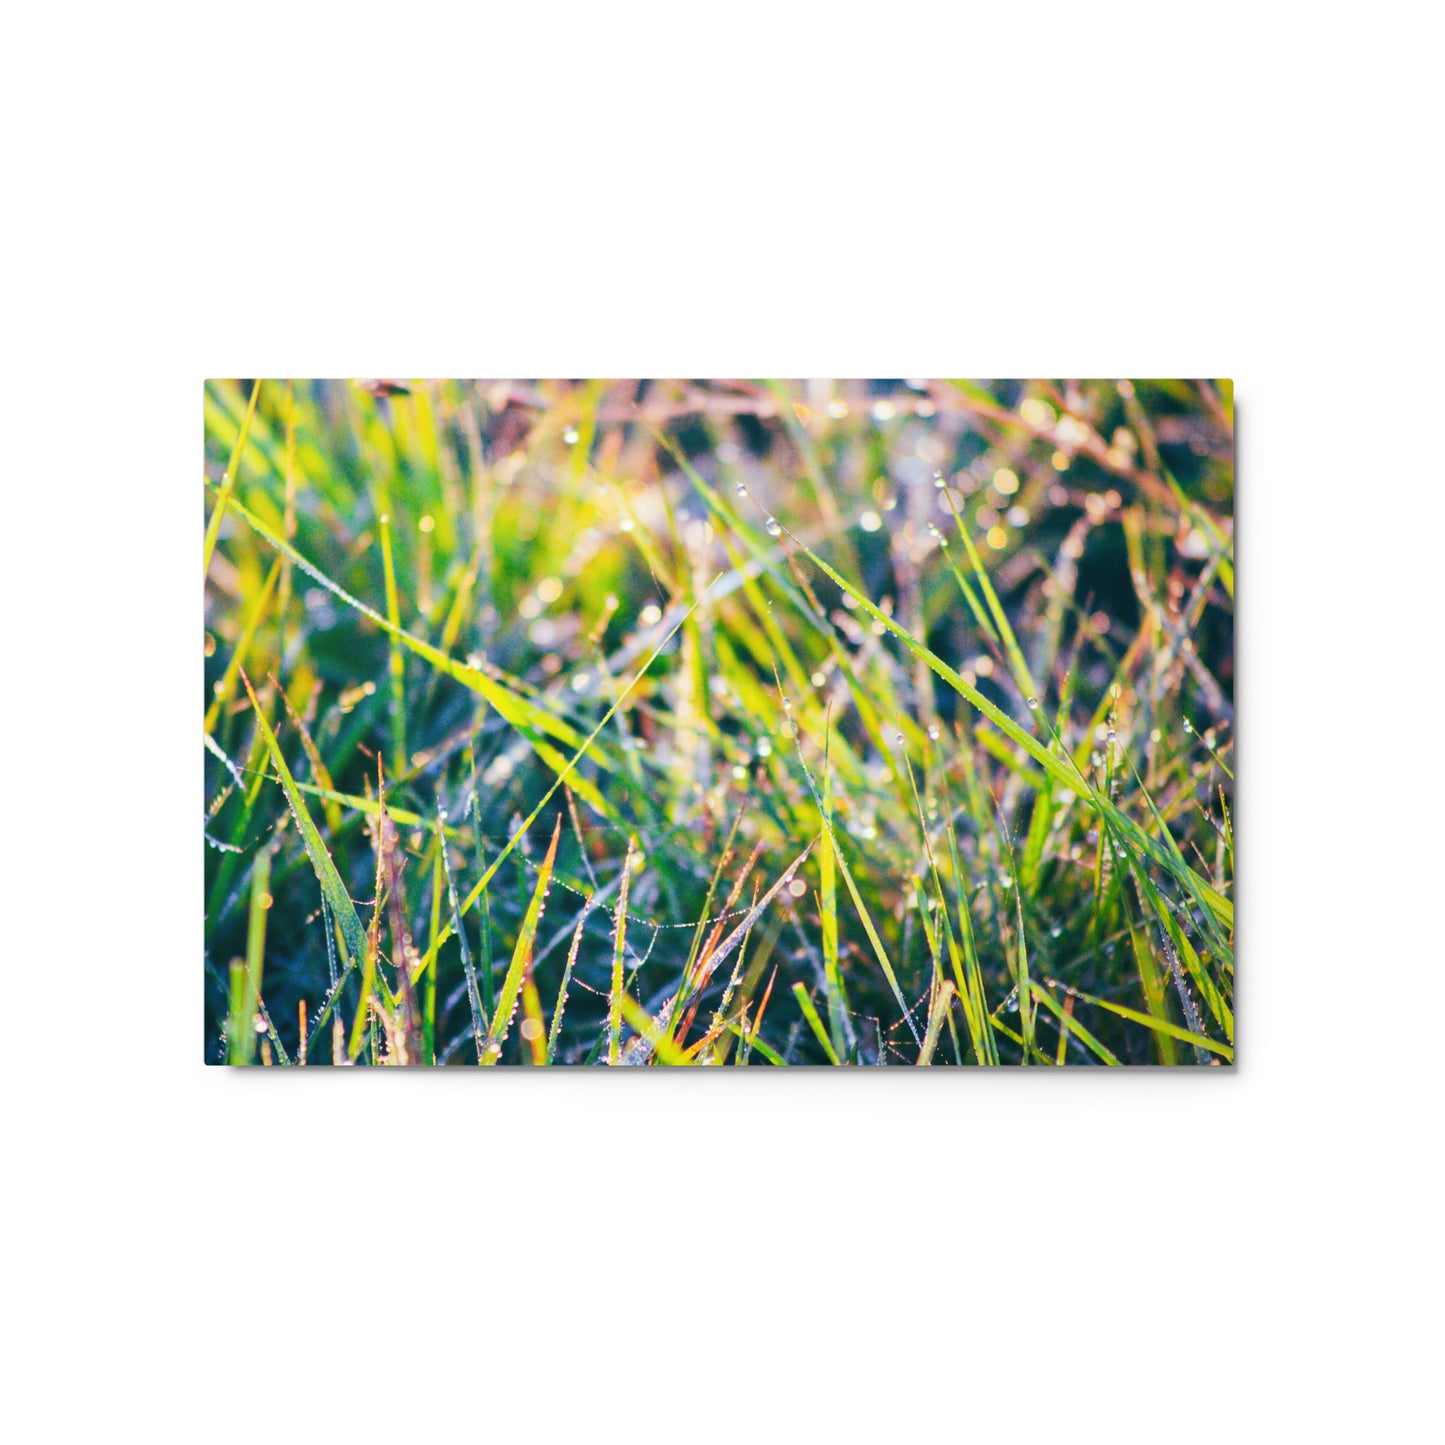 Grass-1 by C. Kovalick